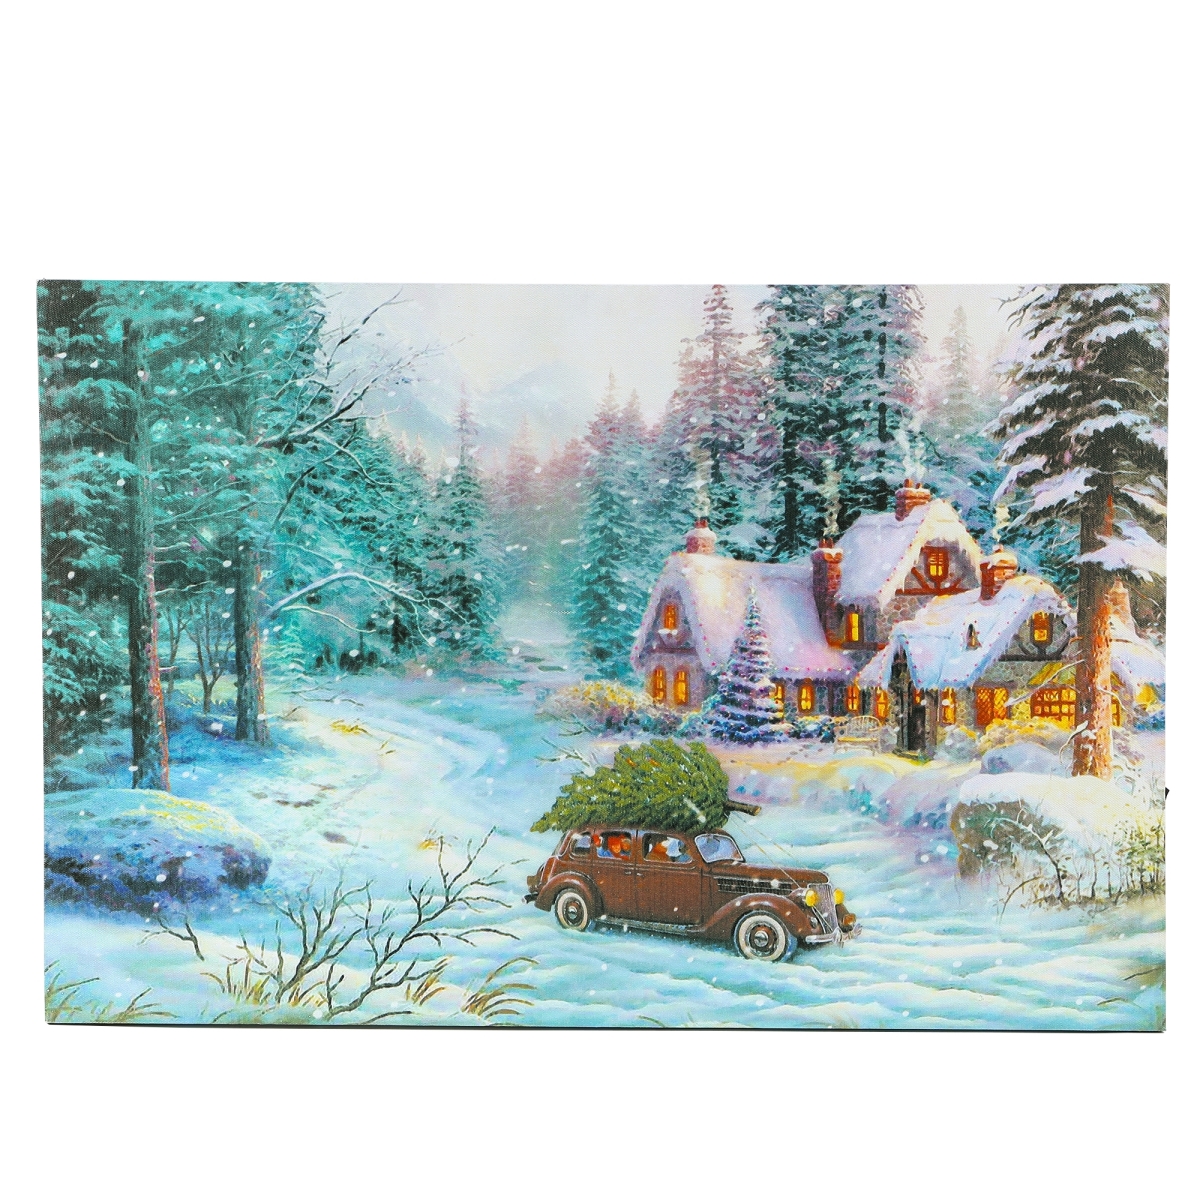 Wha655 Winter Wonderland Thru The Woods Car Print Wall Art With Led Lights